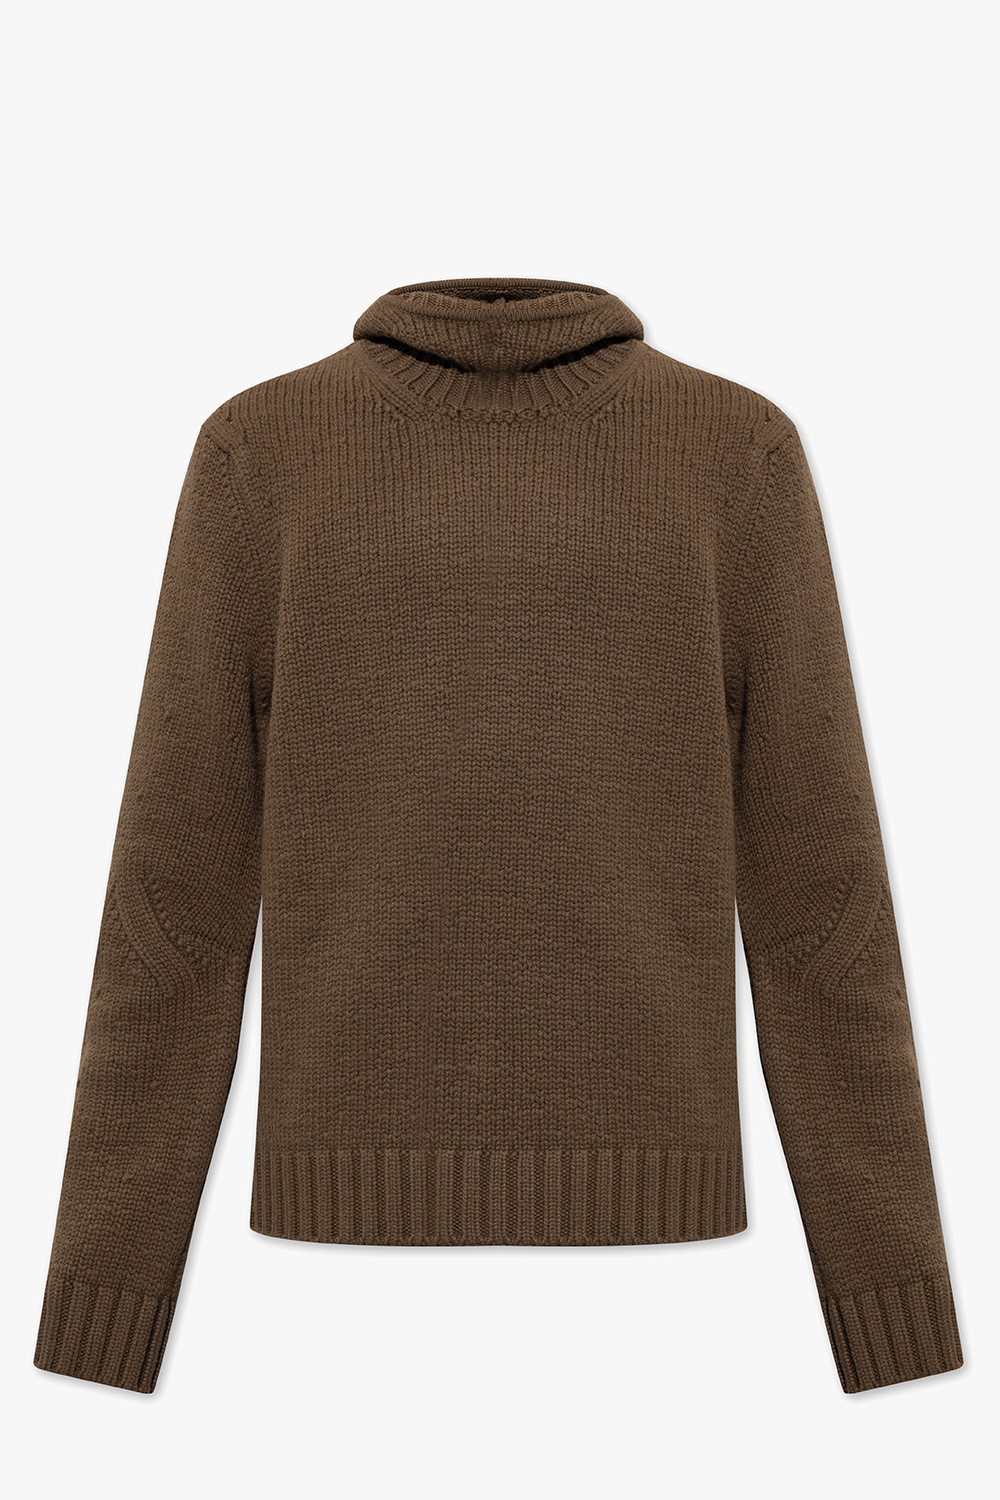 Bottega Veneta Hooded sweater